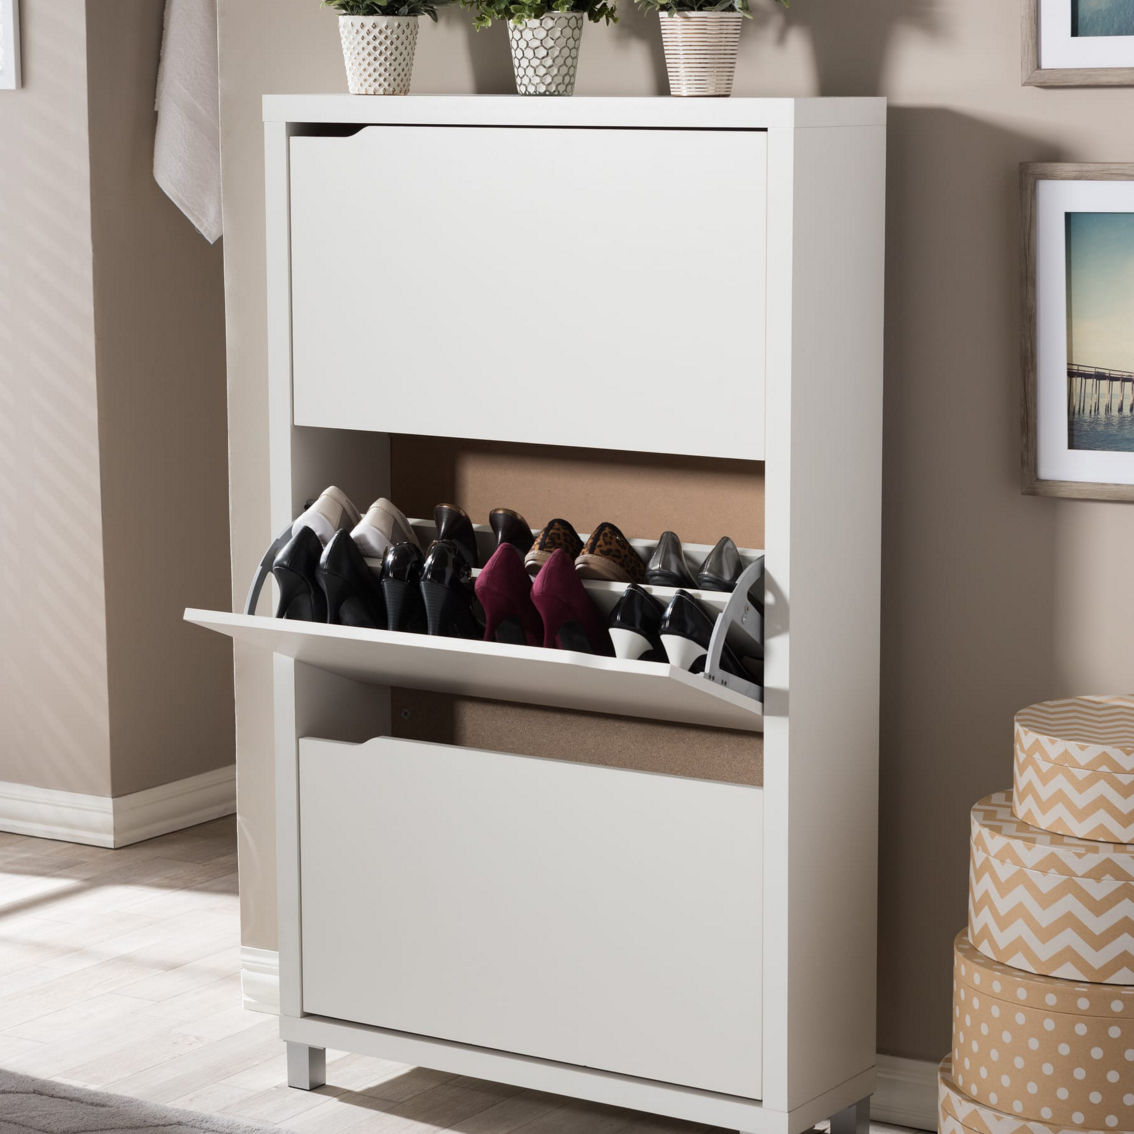 Baxton Studio Simms White Shoe Cabinet - Image 2 of 2